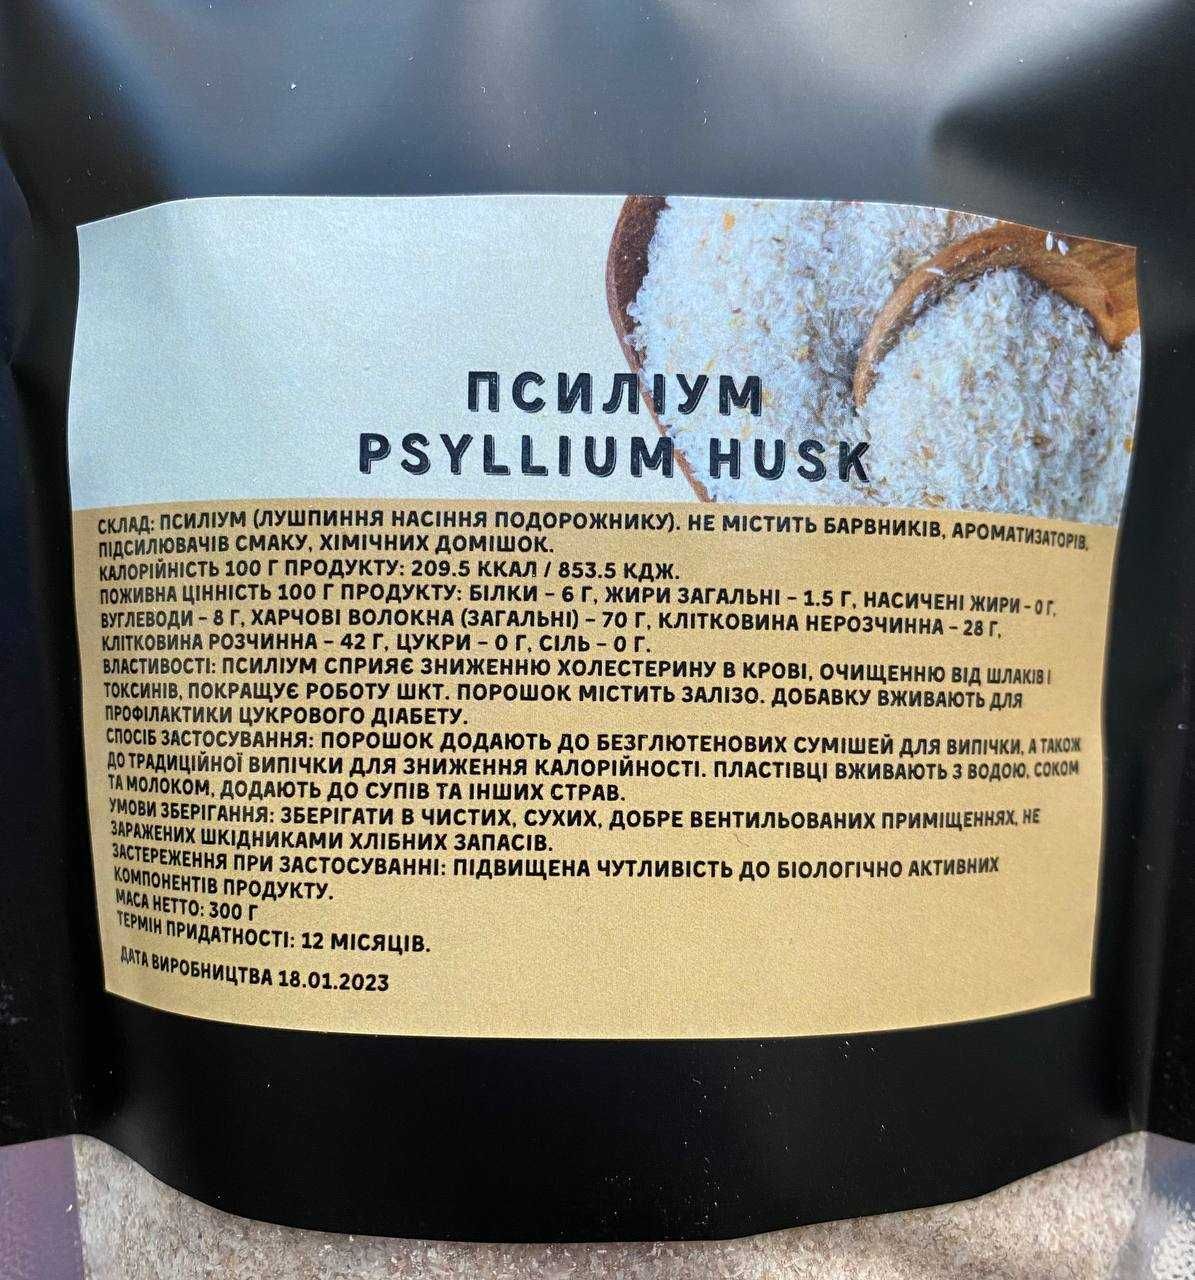 Псиліум Psyllium husk 300 г/Псилиум 1 упаковка 300 г - 350 грн.